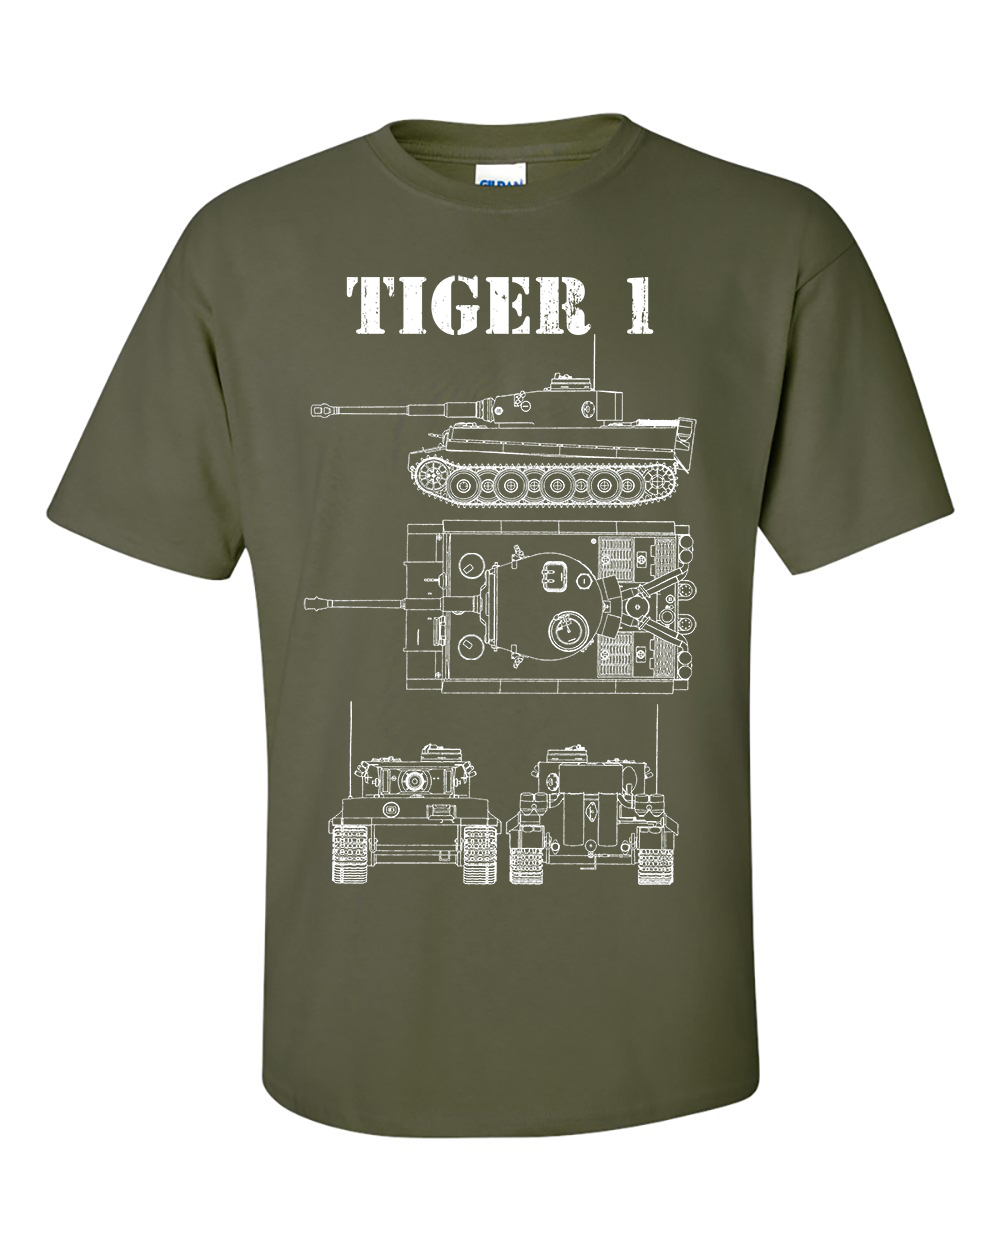 Tiger 1 Tank T-Shirt Technical Drawing Blueprint WW2 German Army Shirt